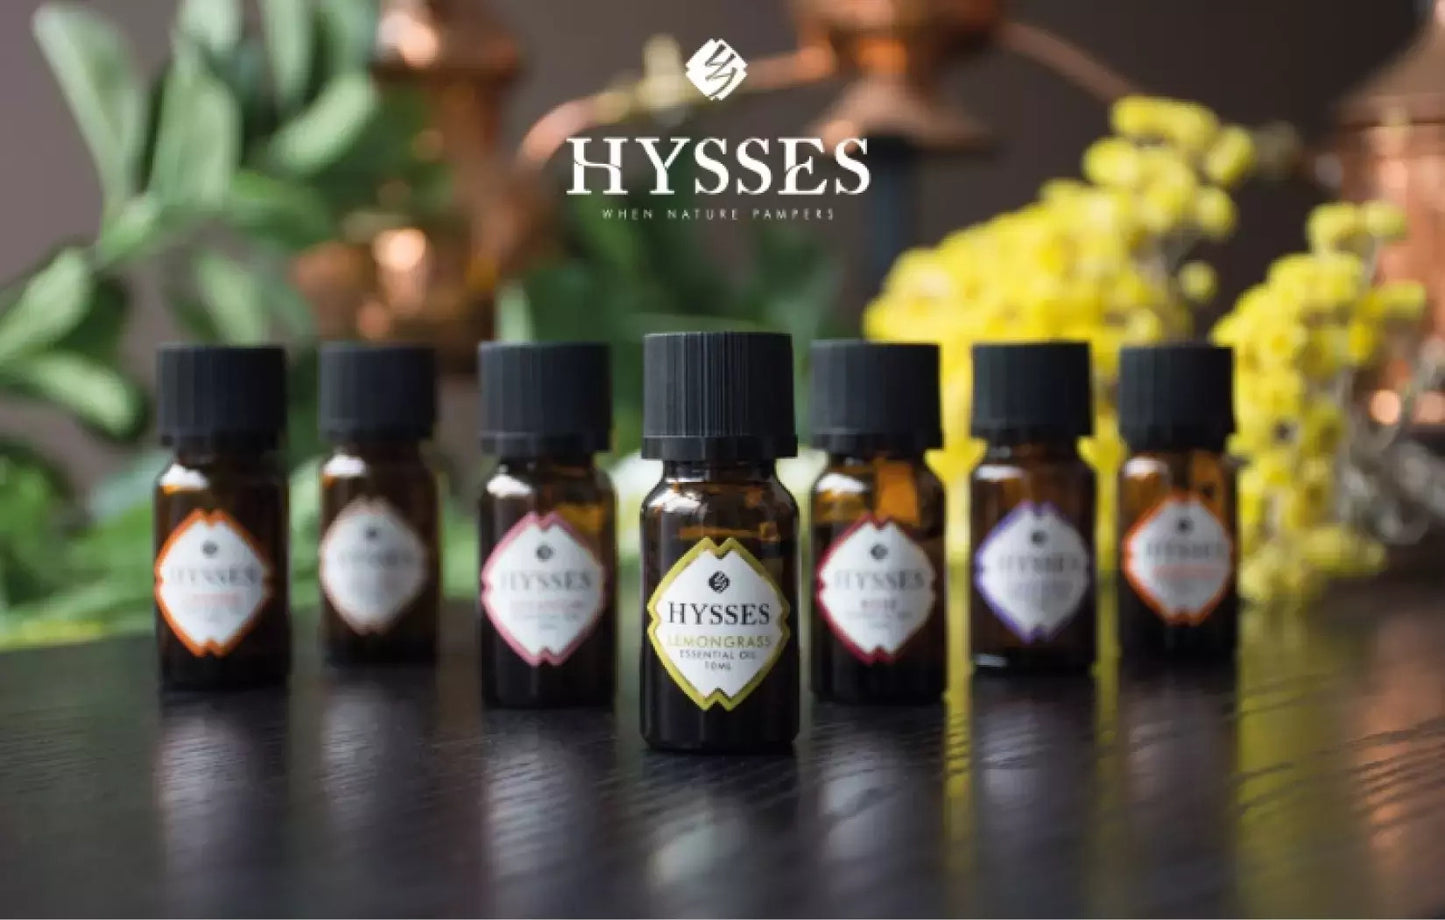 Hysses Essential Oils, Chakras Collection 10ml - Solar Plexus